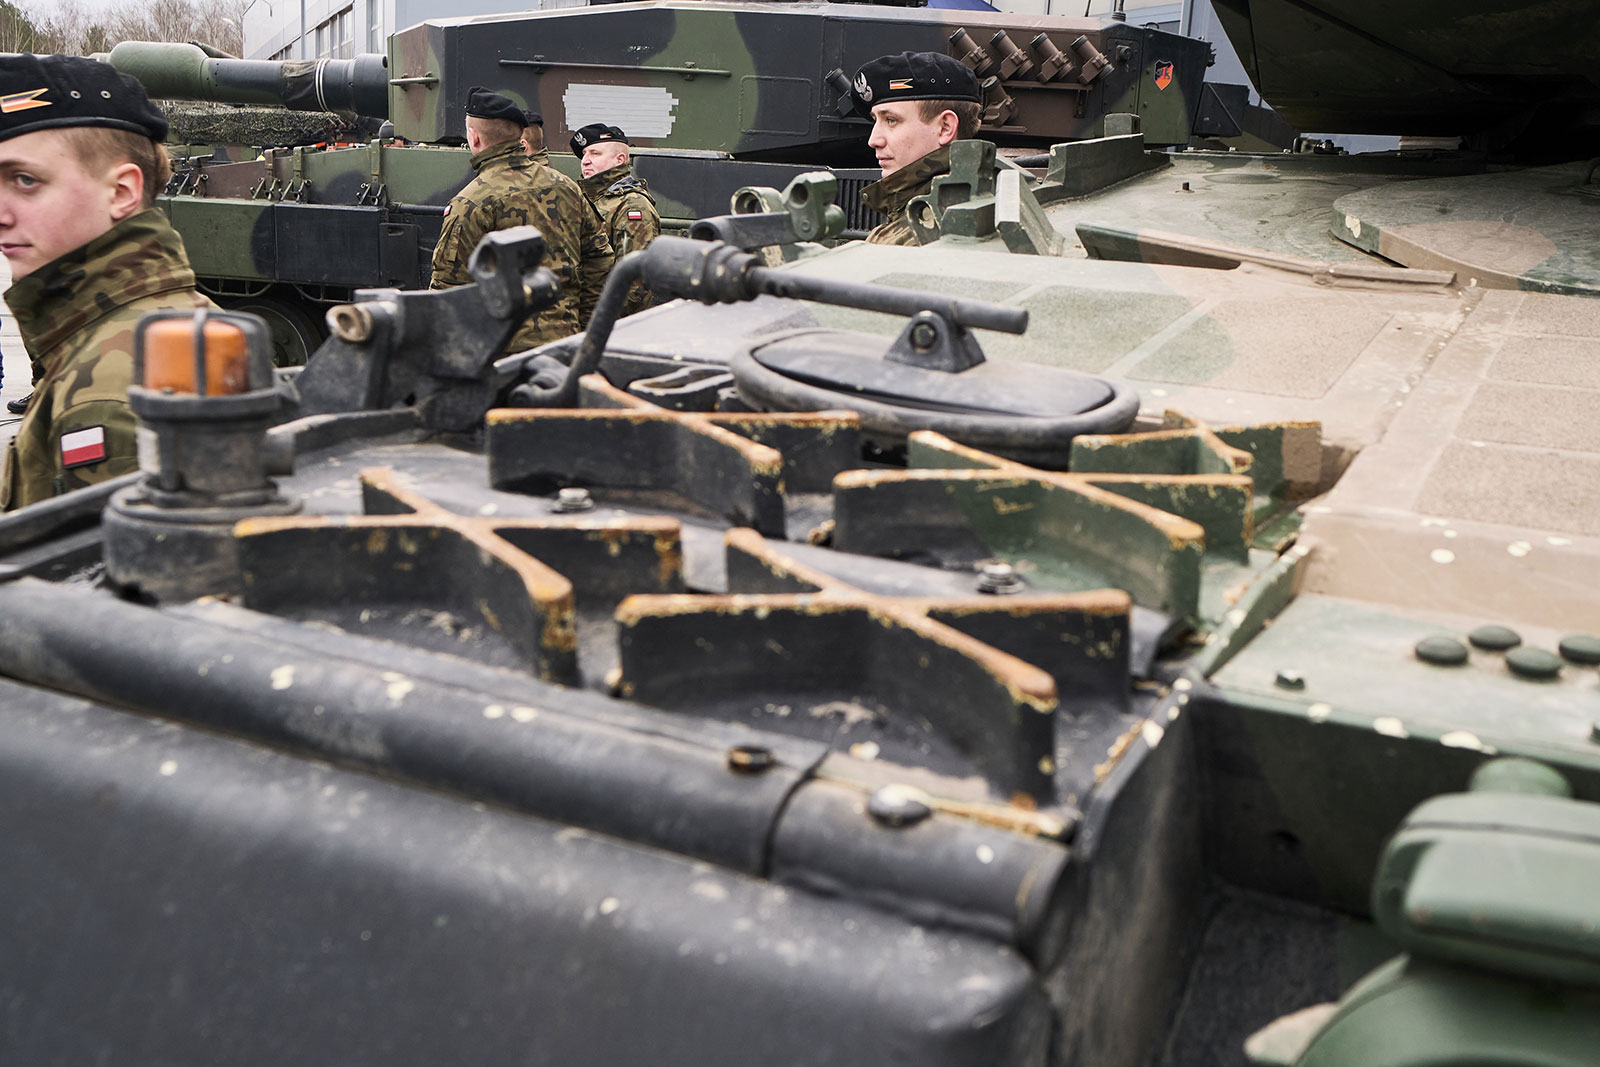 A Leopard 2 A4 tank on display at the Świętoszów Tank Training Center in Świętoszów, Poland.